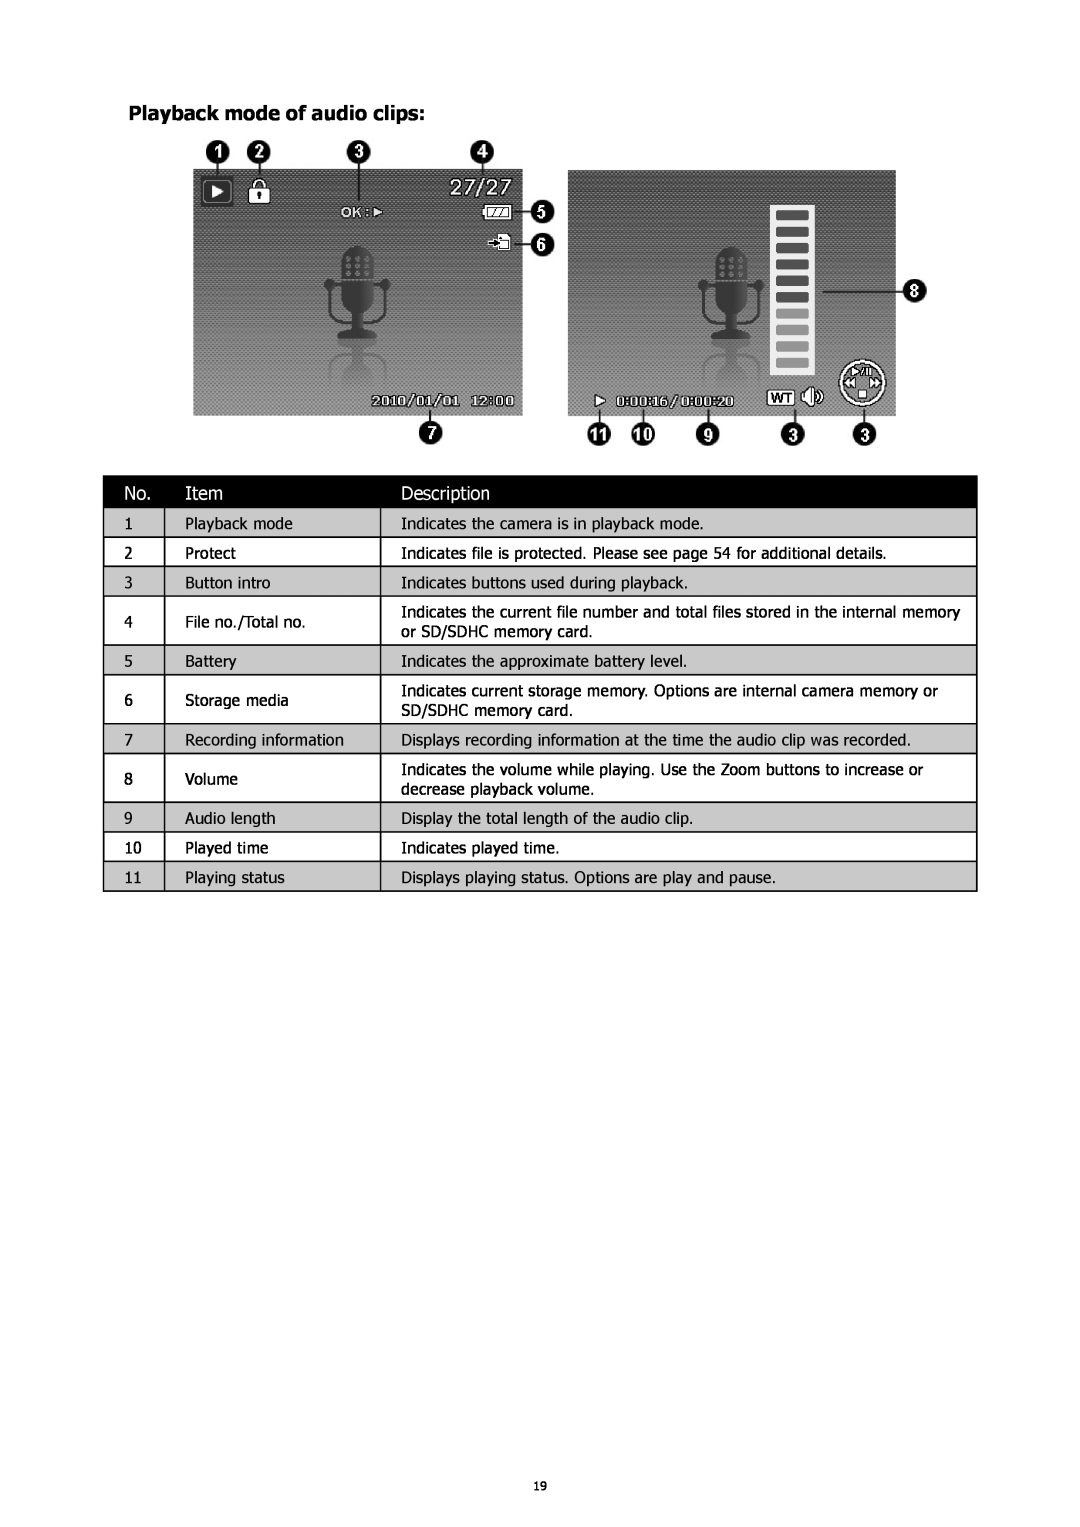 HP SW450 manual Playback mode of audio clips, Description 